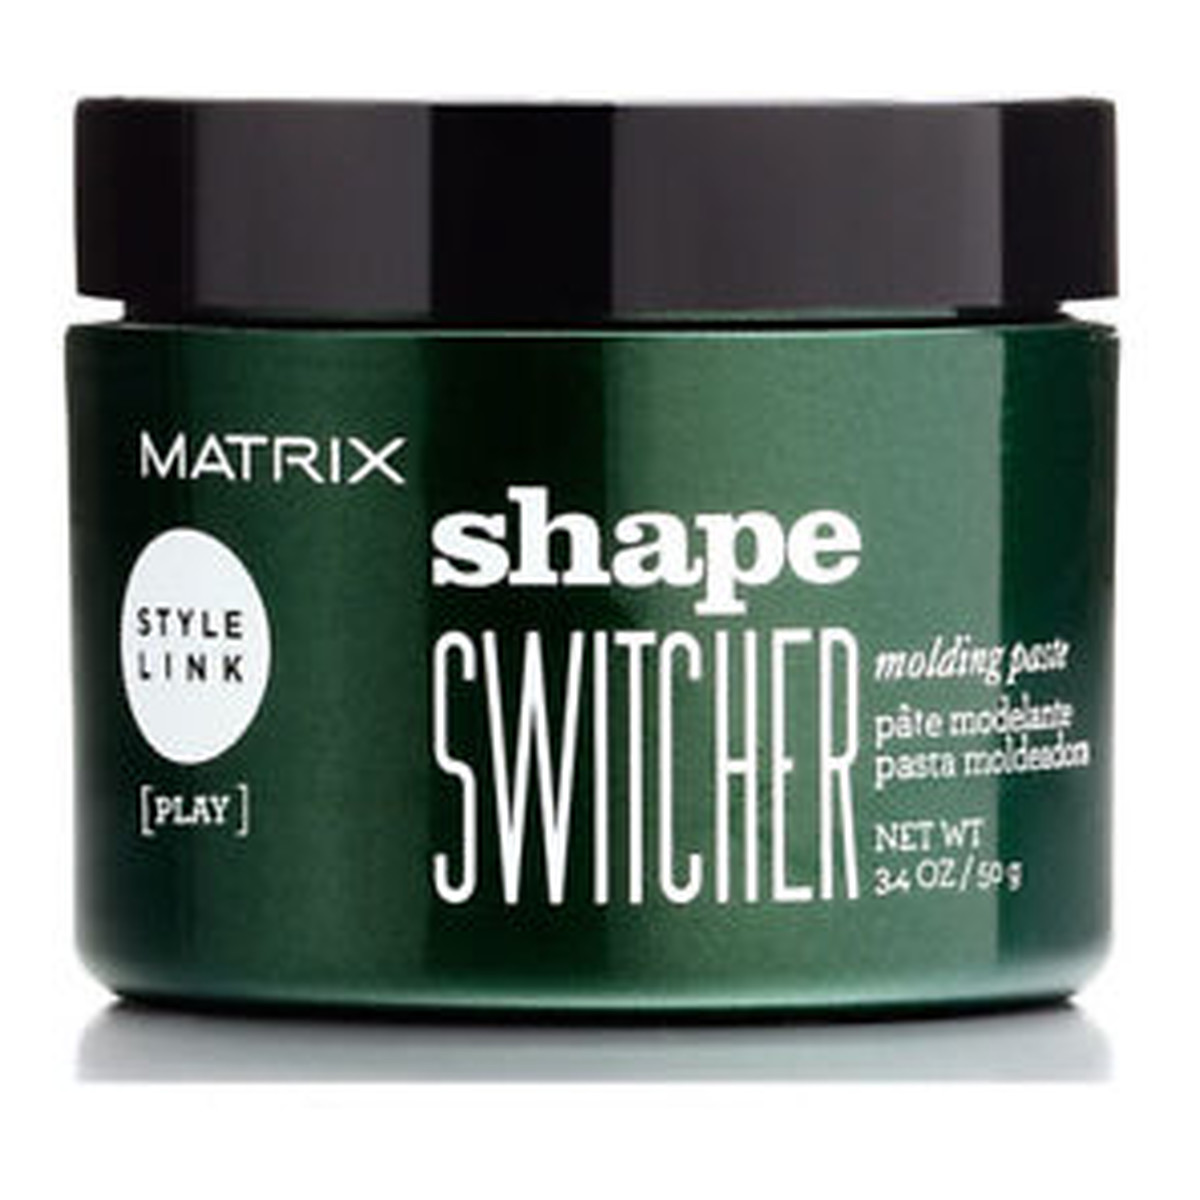 Matrix Style Link Shape Switcher Molding Paste pasta modelująca włosy Hold 5 50ml